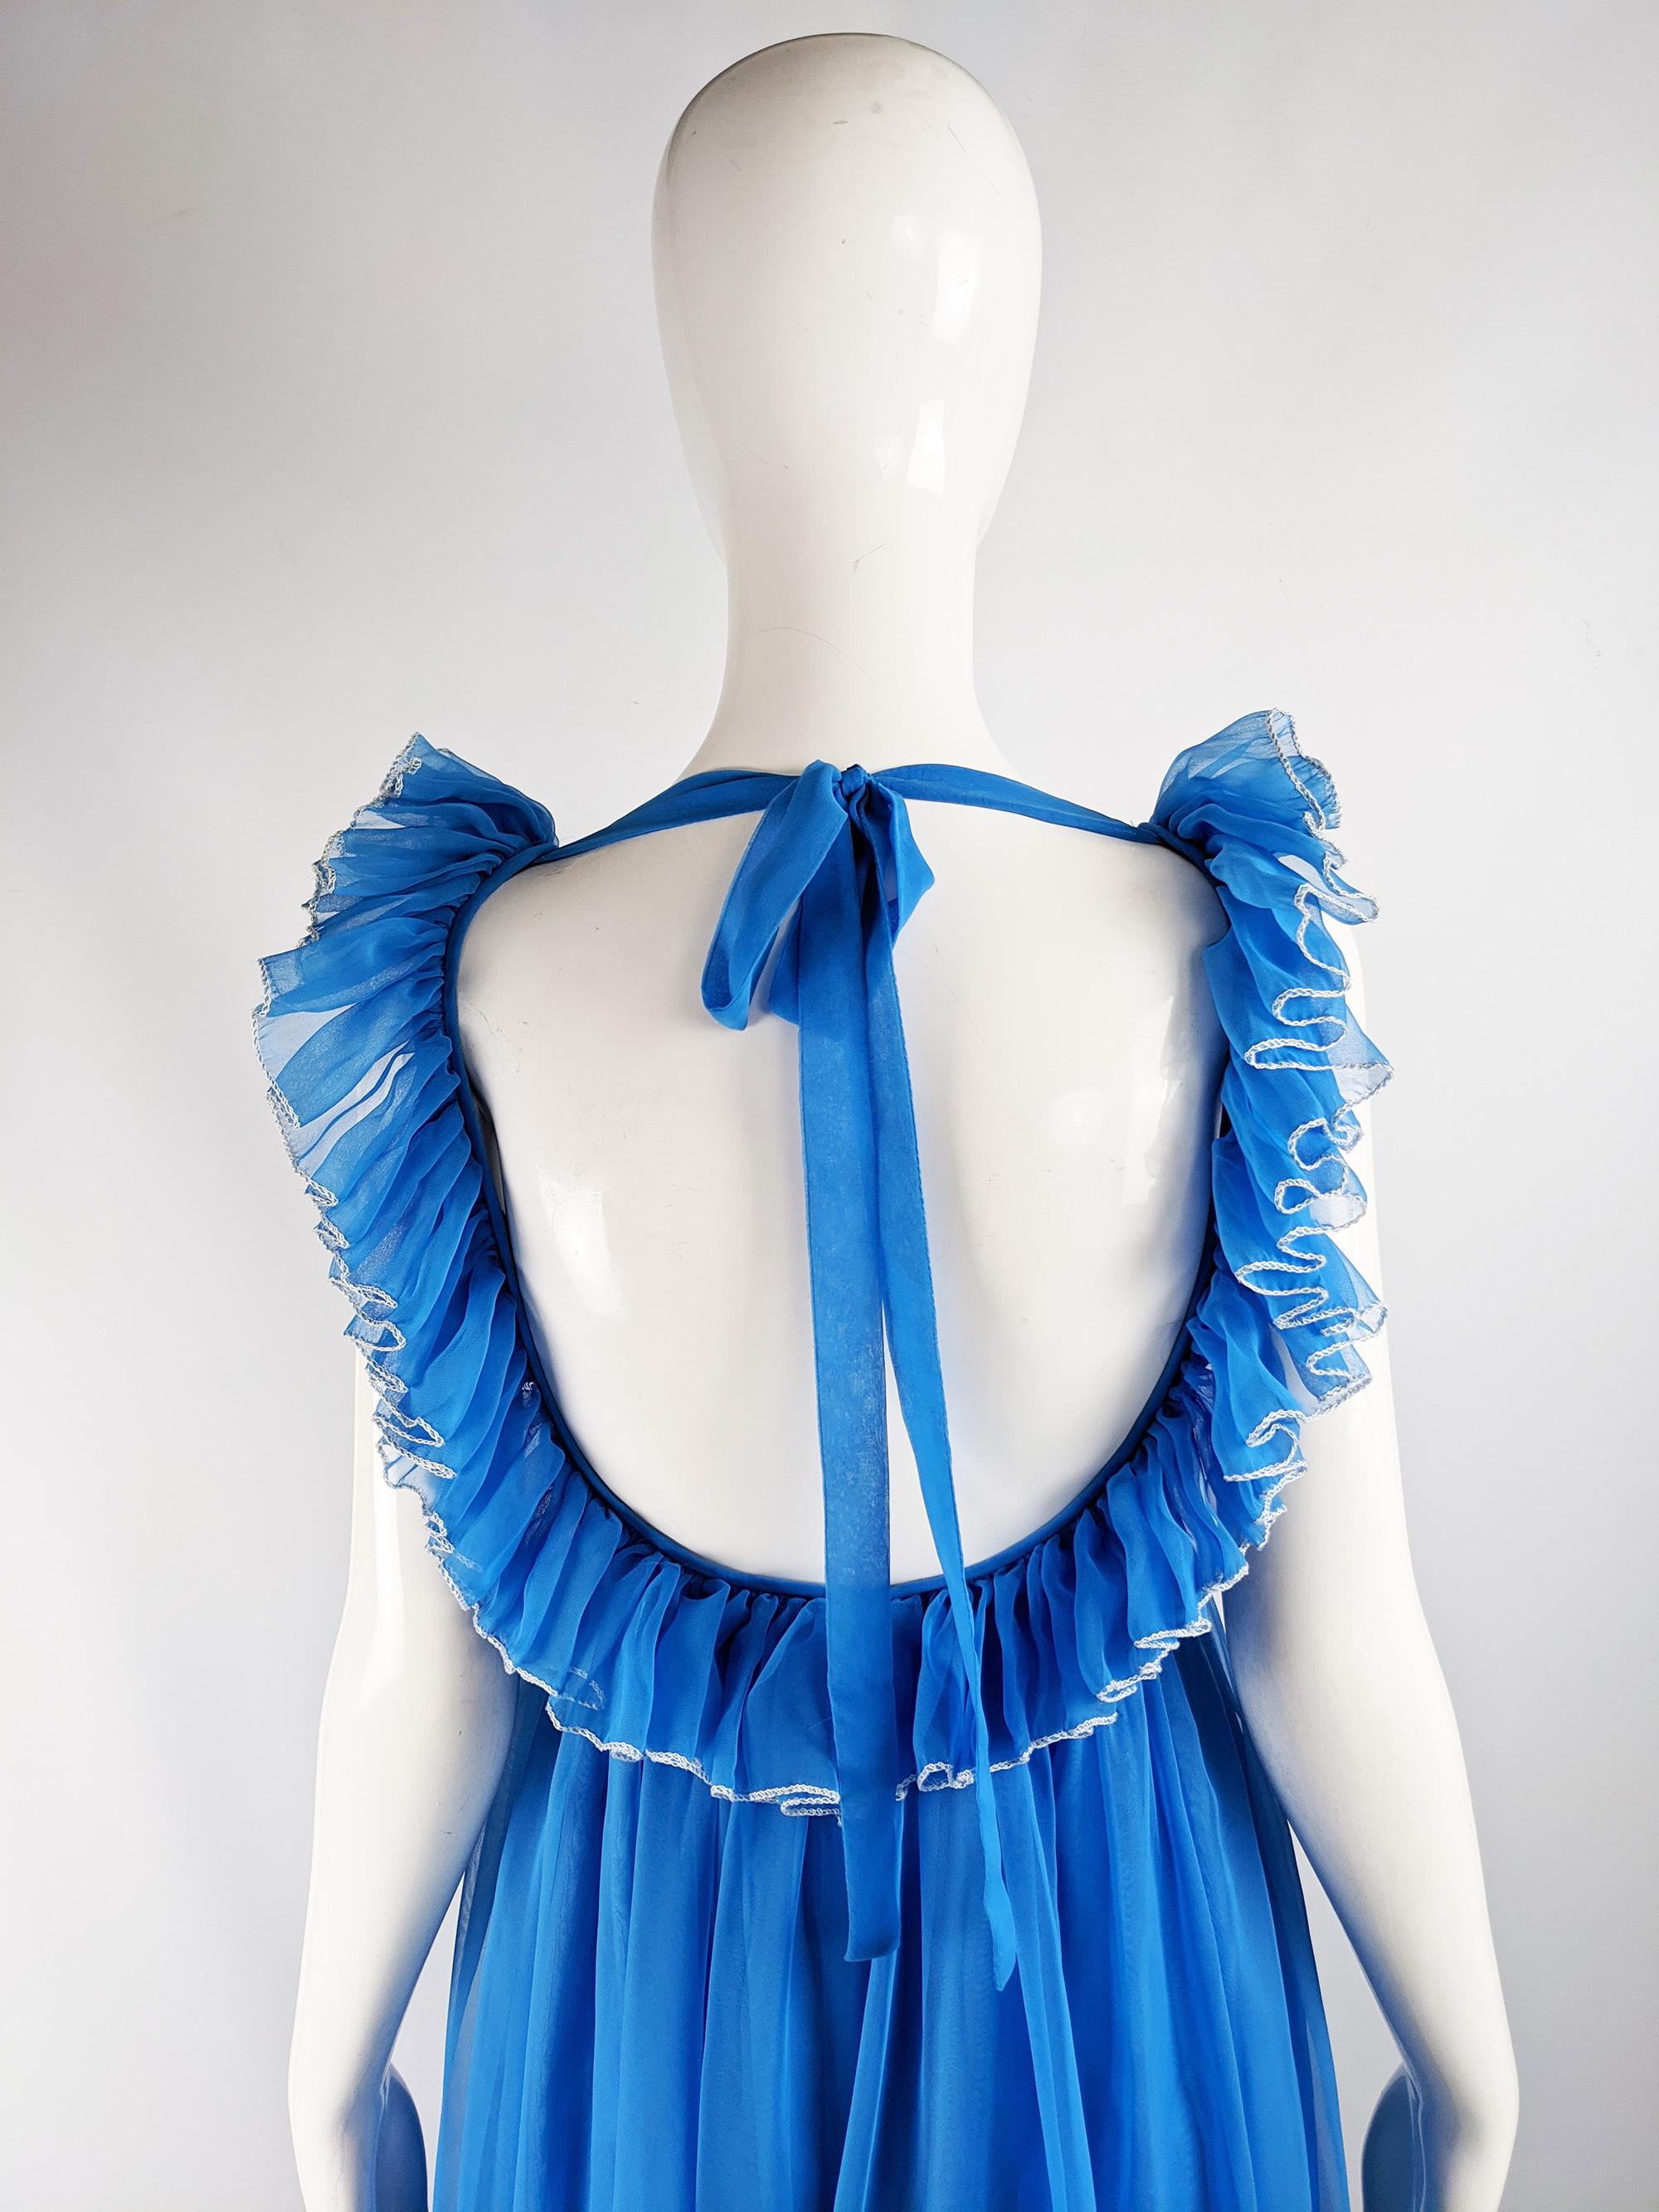 Jean Varon Vintage 1960s Blue Chiffon Maxi Evening Dress For Sale 5